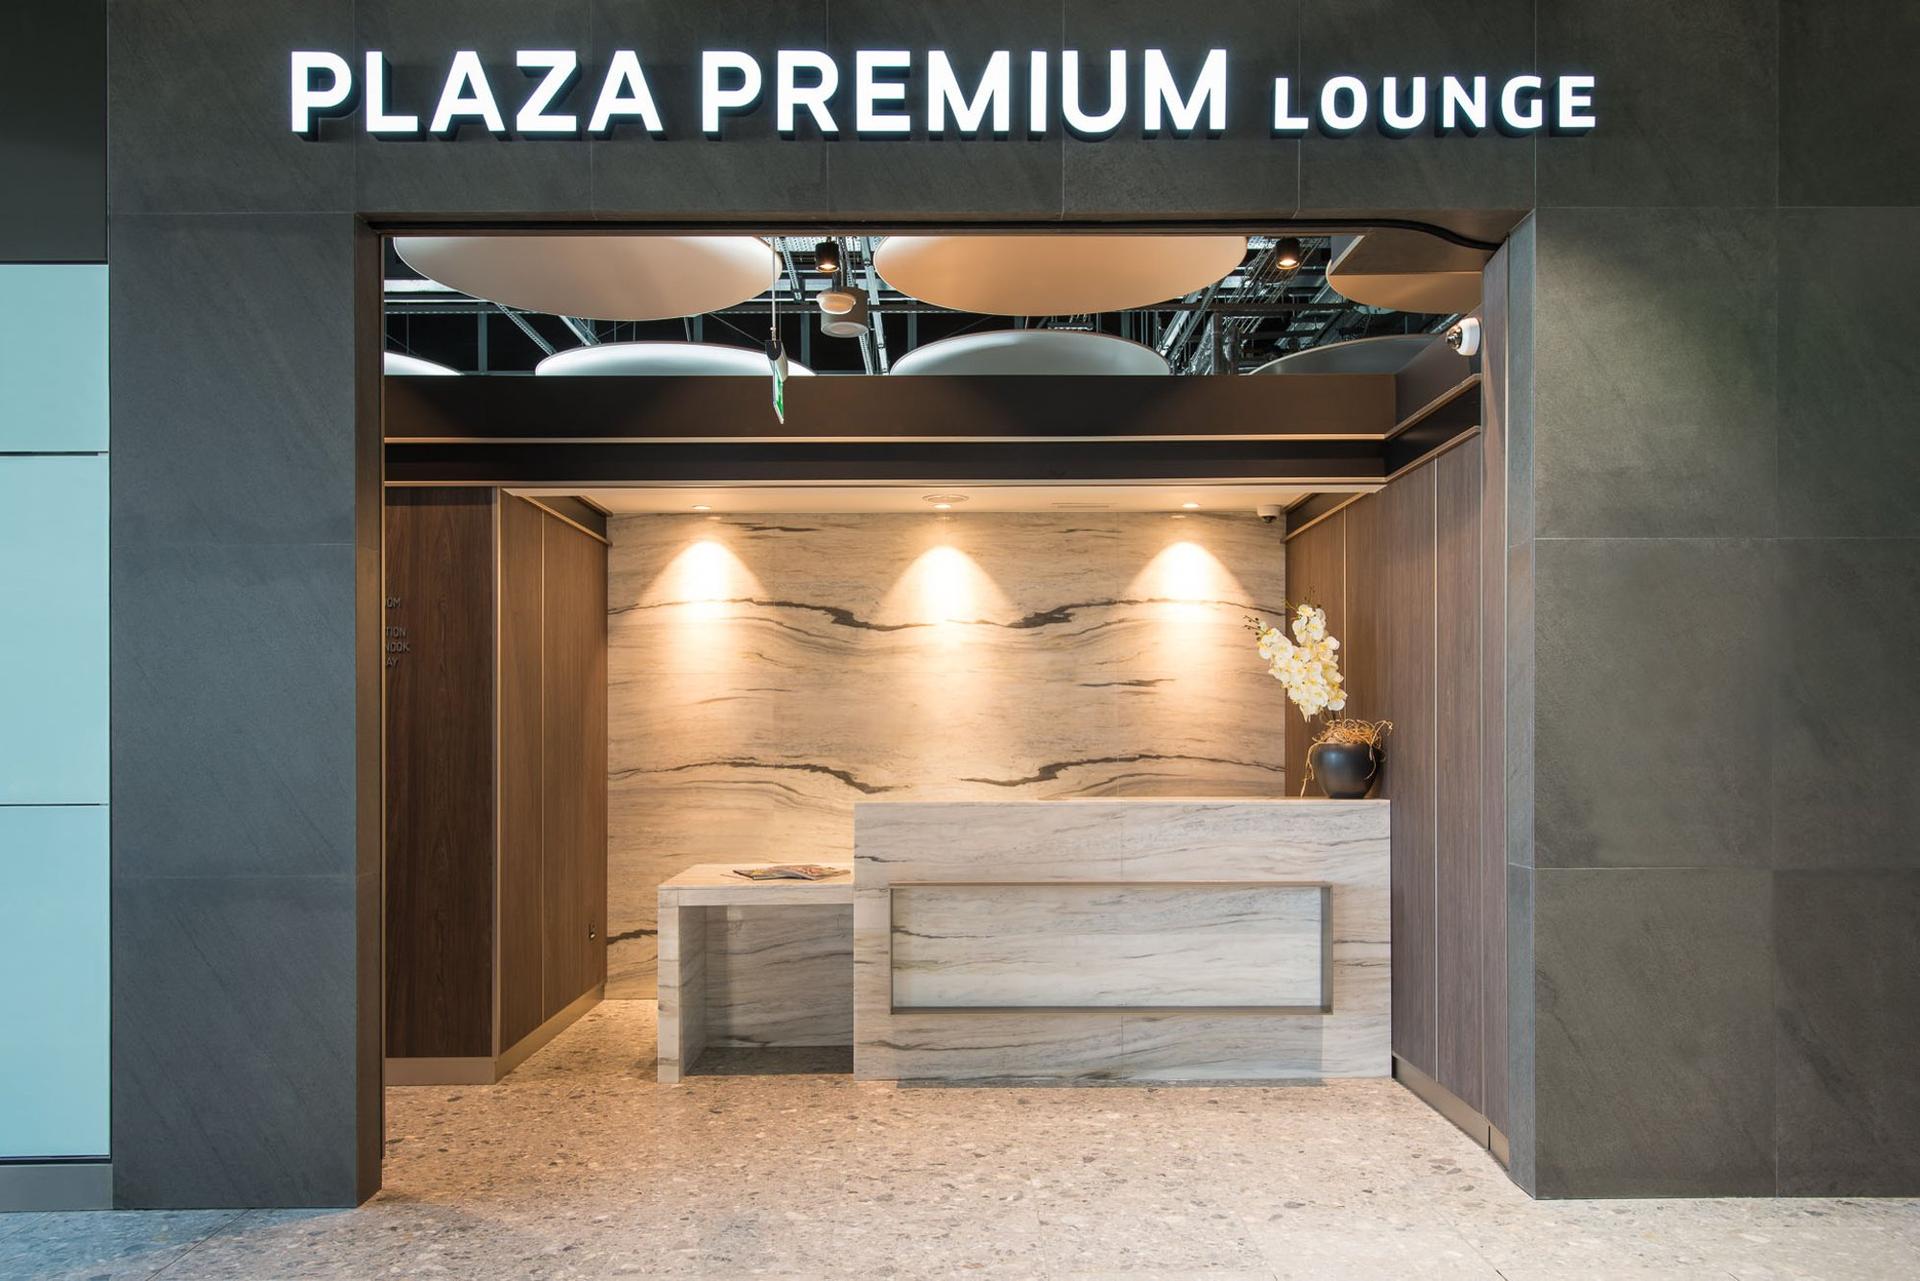 Plaza Premium Lounge image 64 of 65